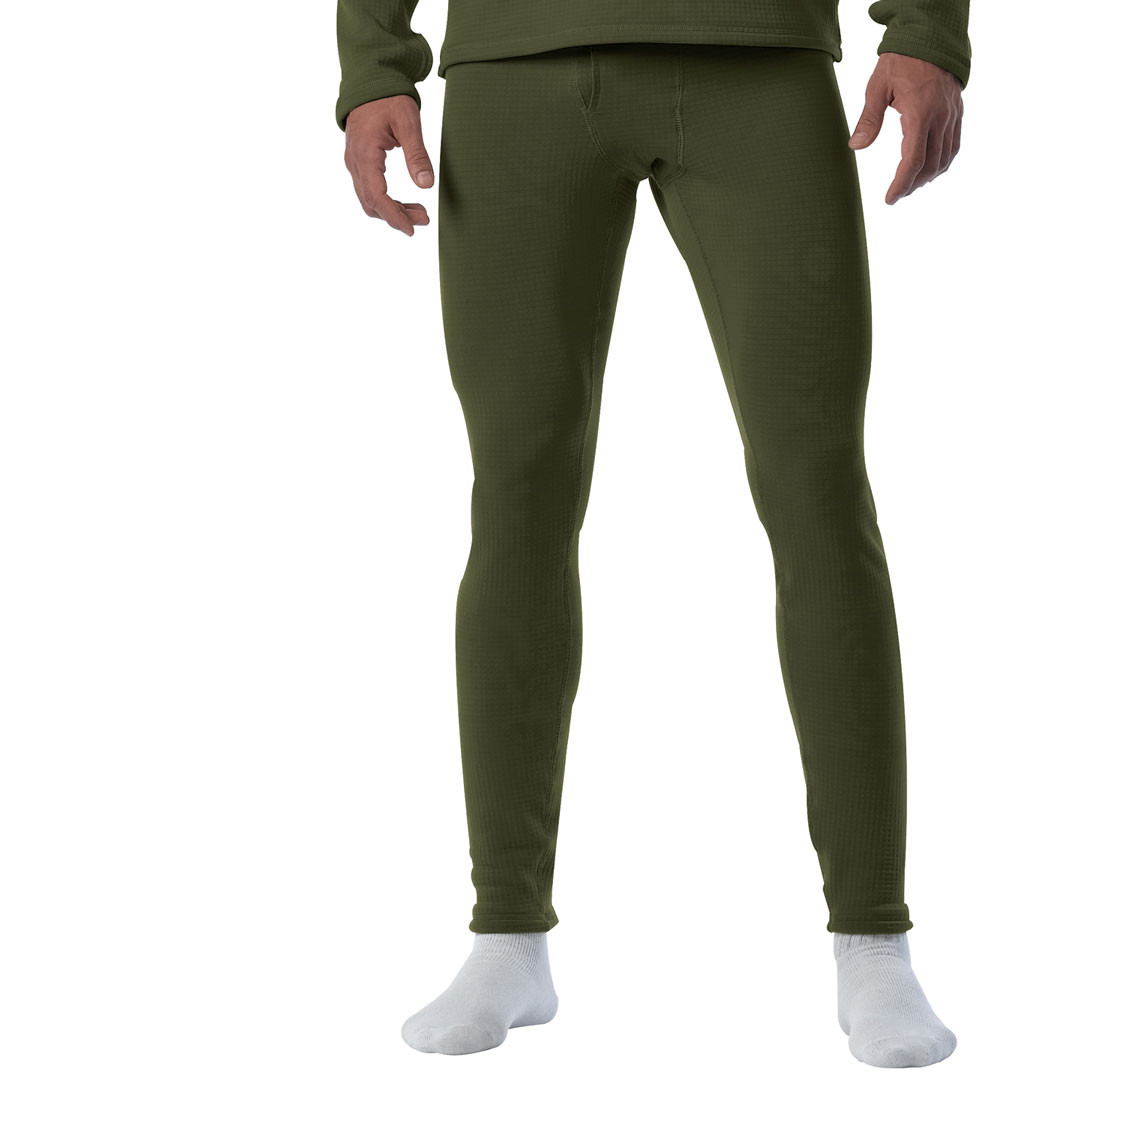 Shop Military Gen III Level II Underwear Bottoms - Fatigues Army Navy